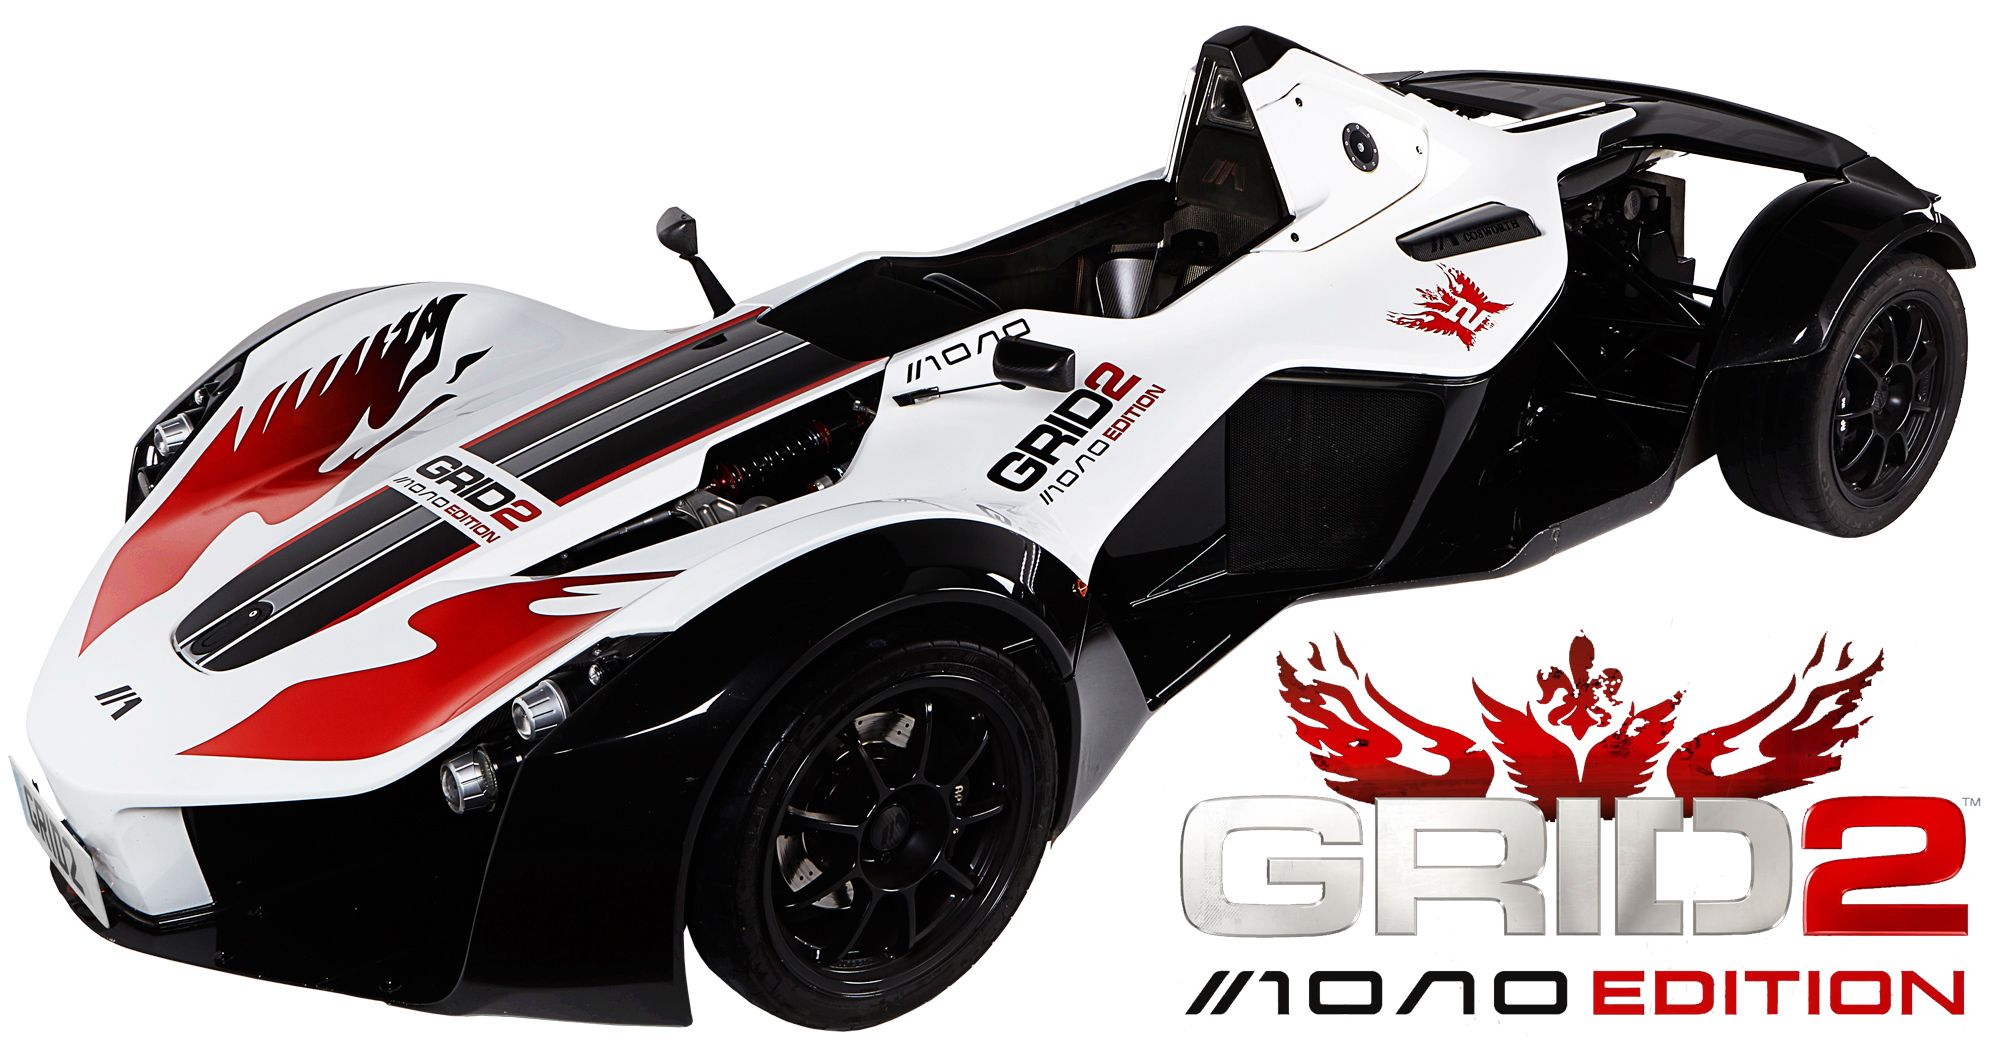 2013 GRID2: Mono Edition